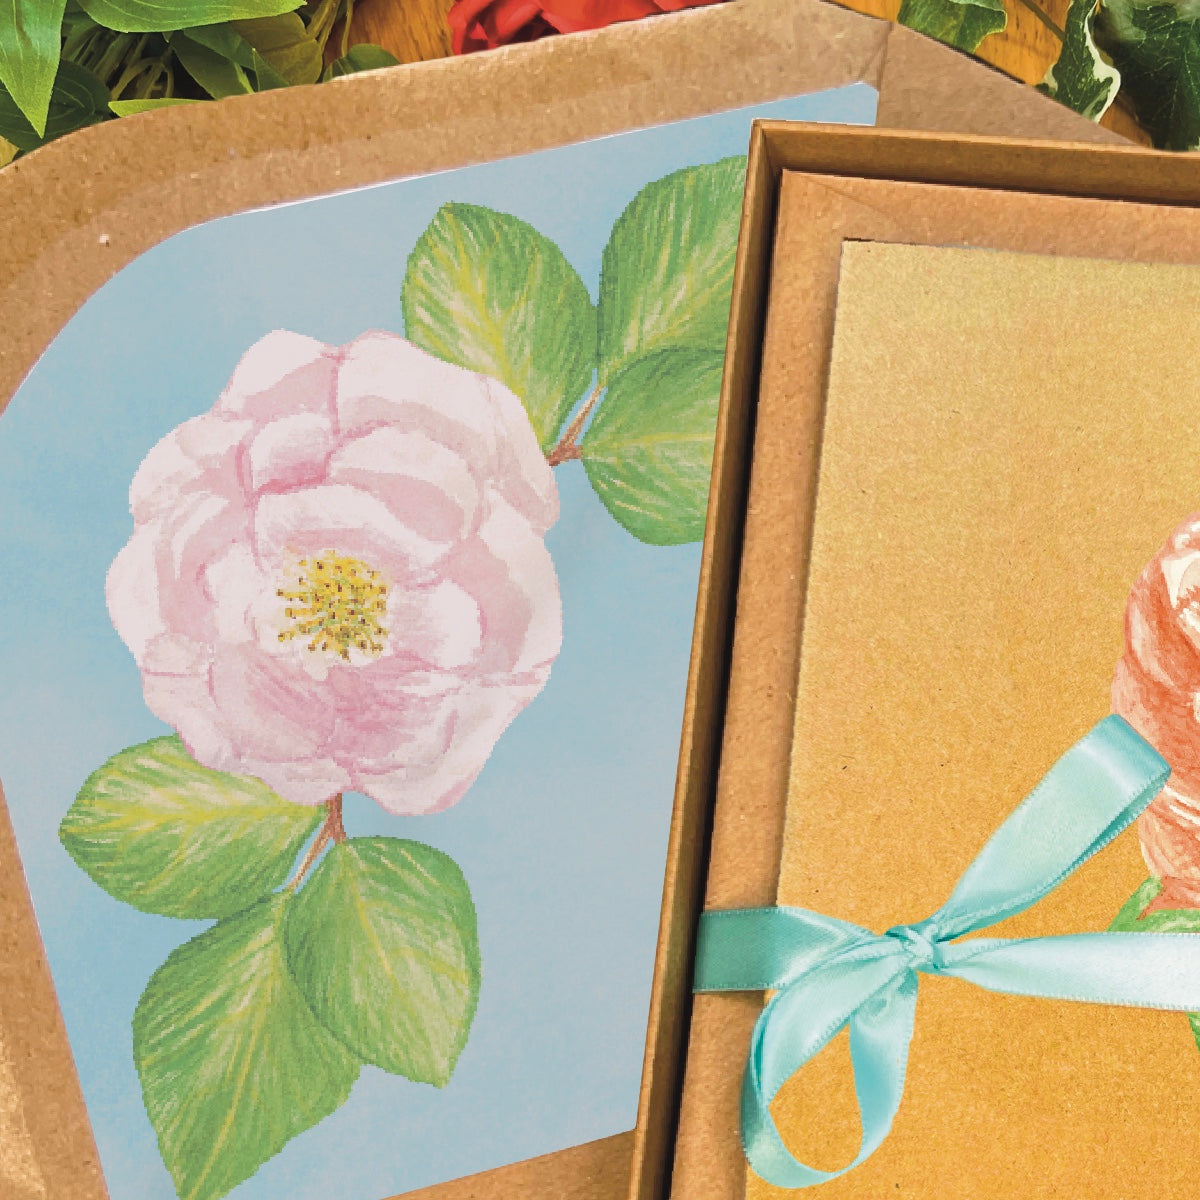 Lavender Rose Greetings Card (Customisable)